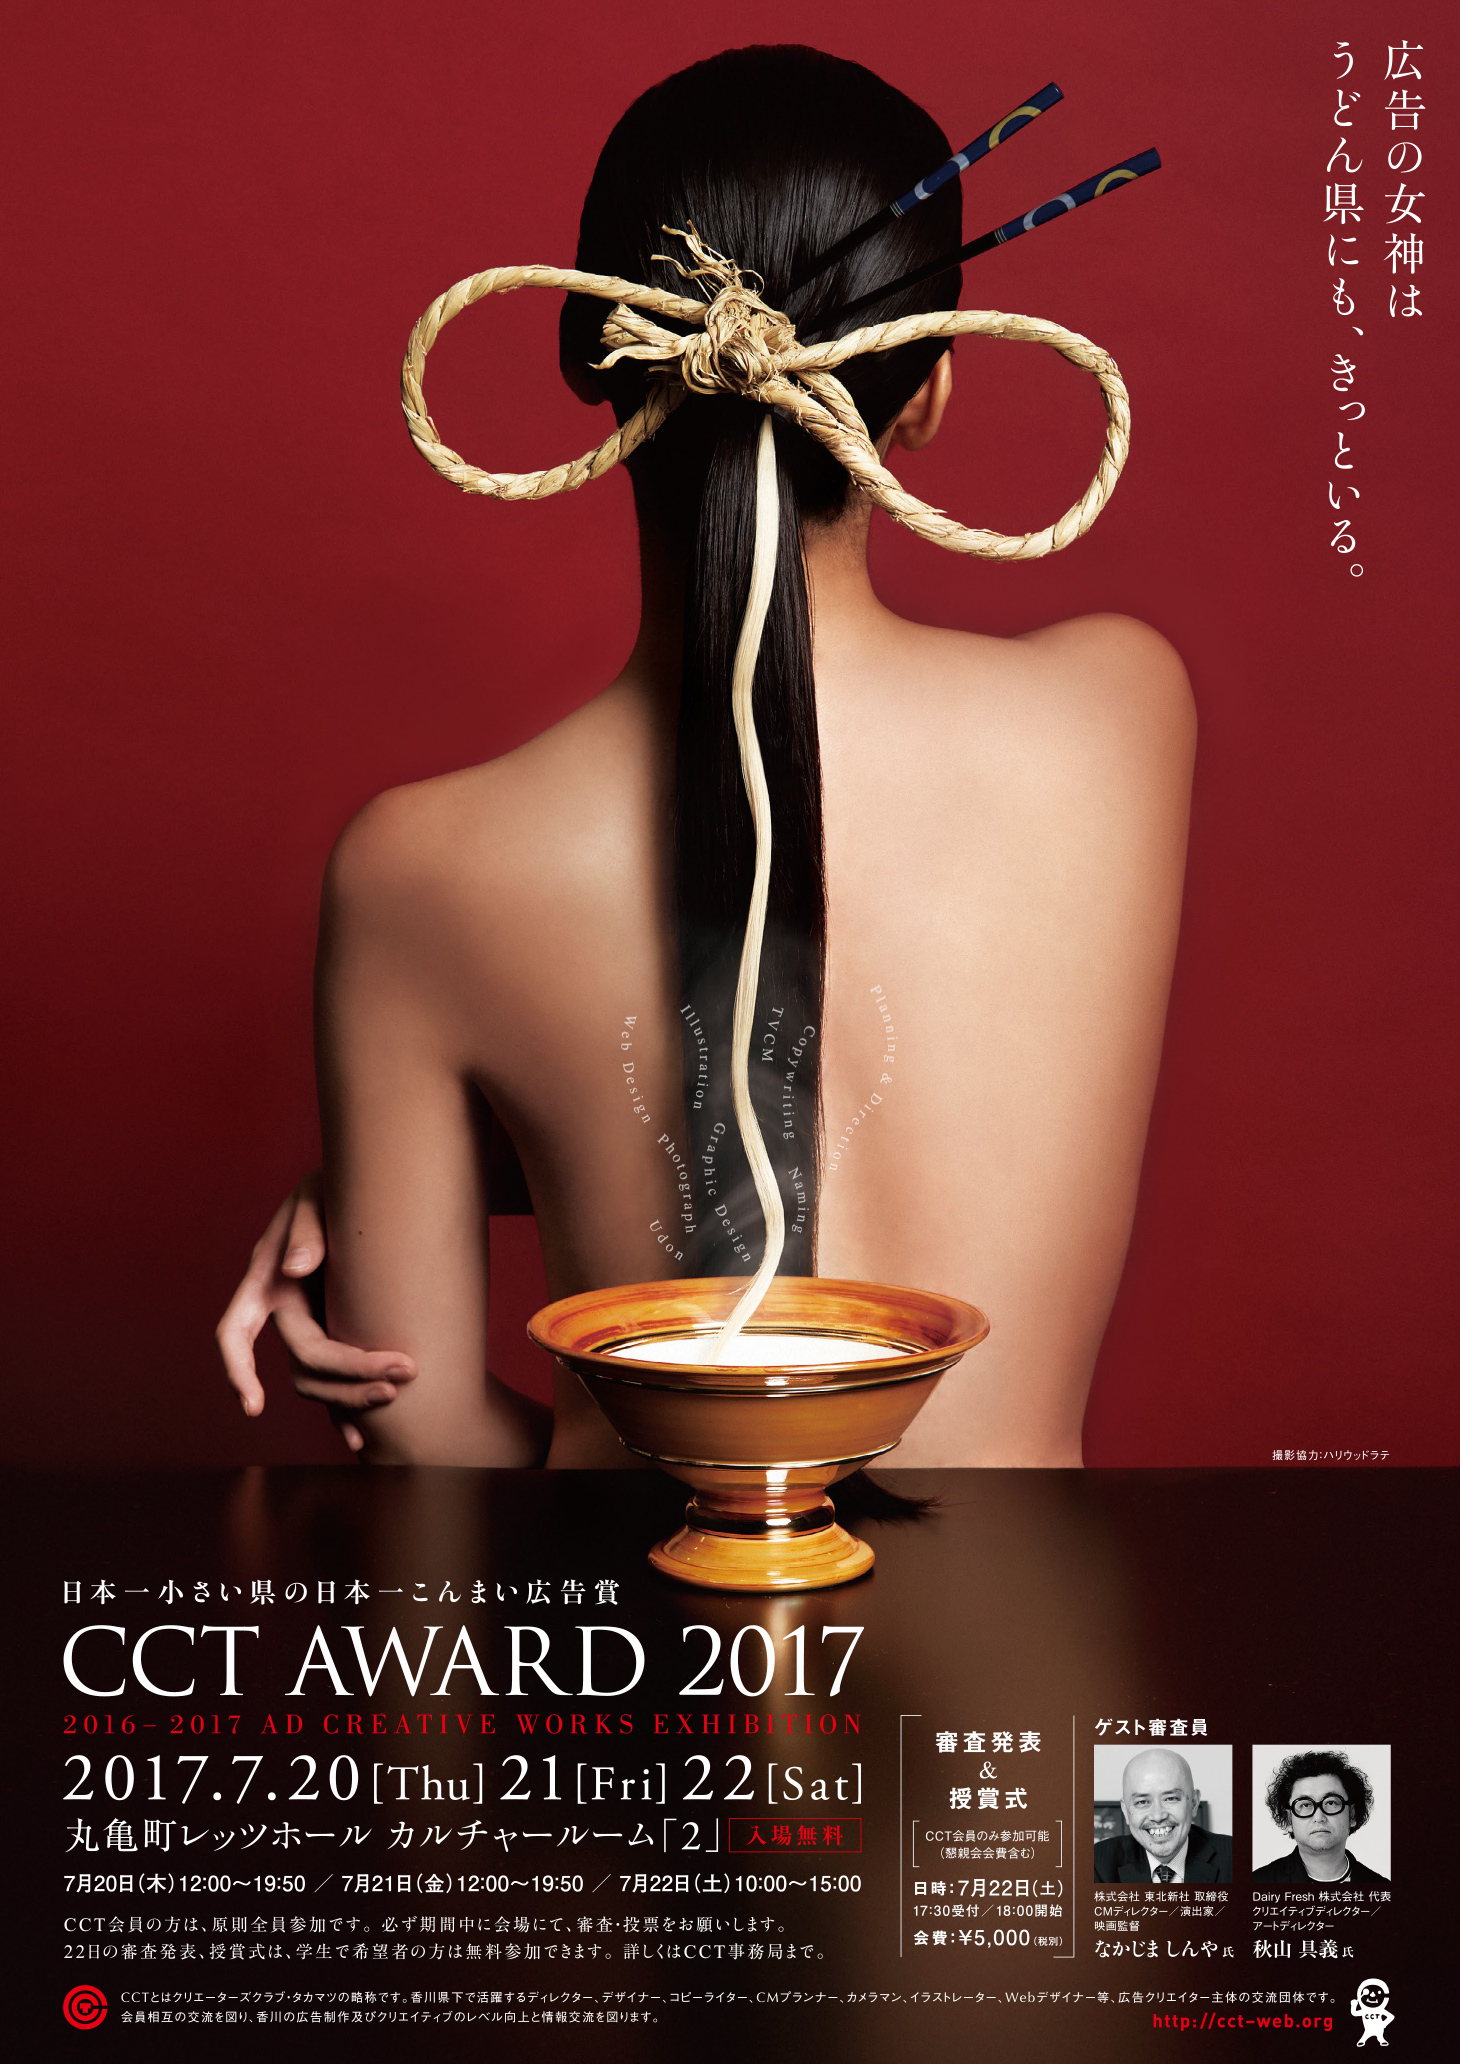 CCT AWARD 2017